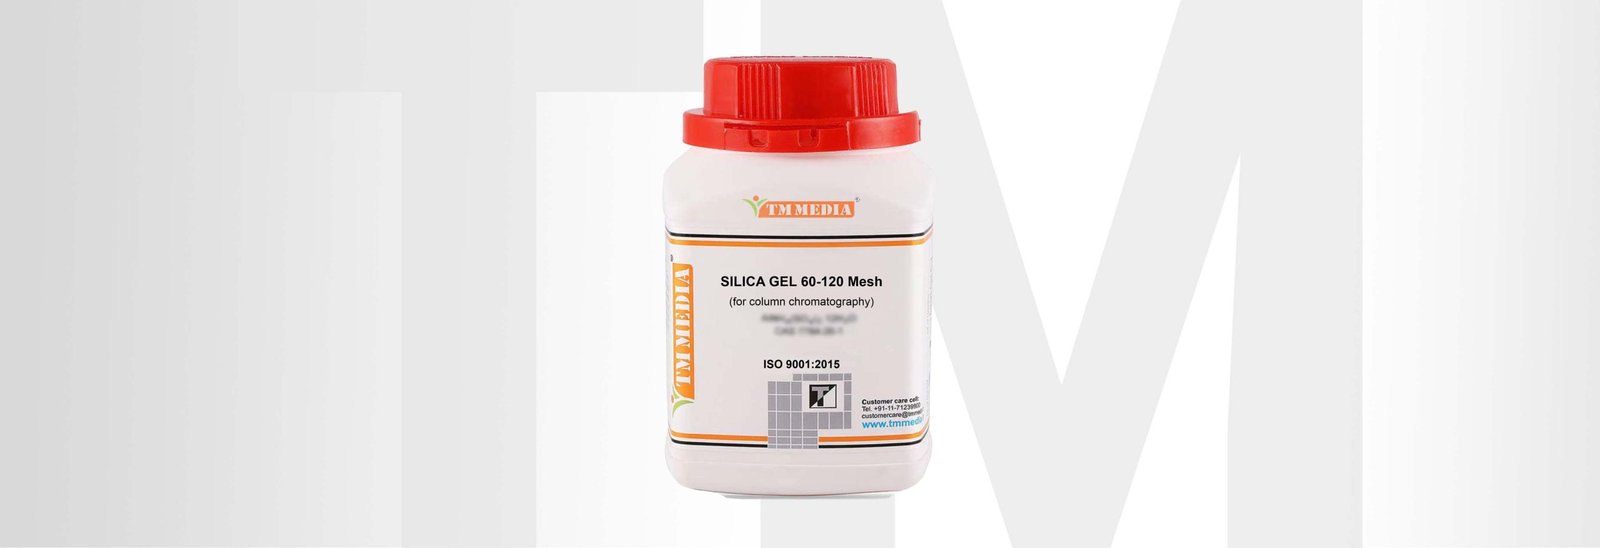 Silica Gel for Column Chromatography